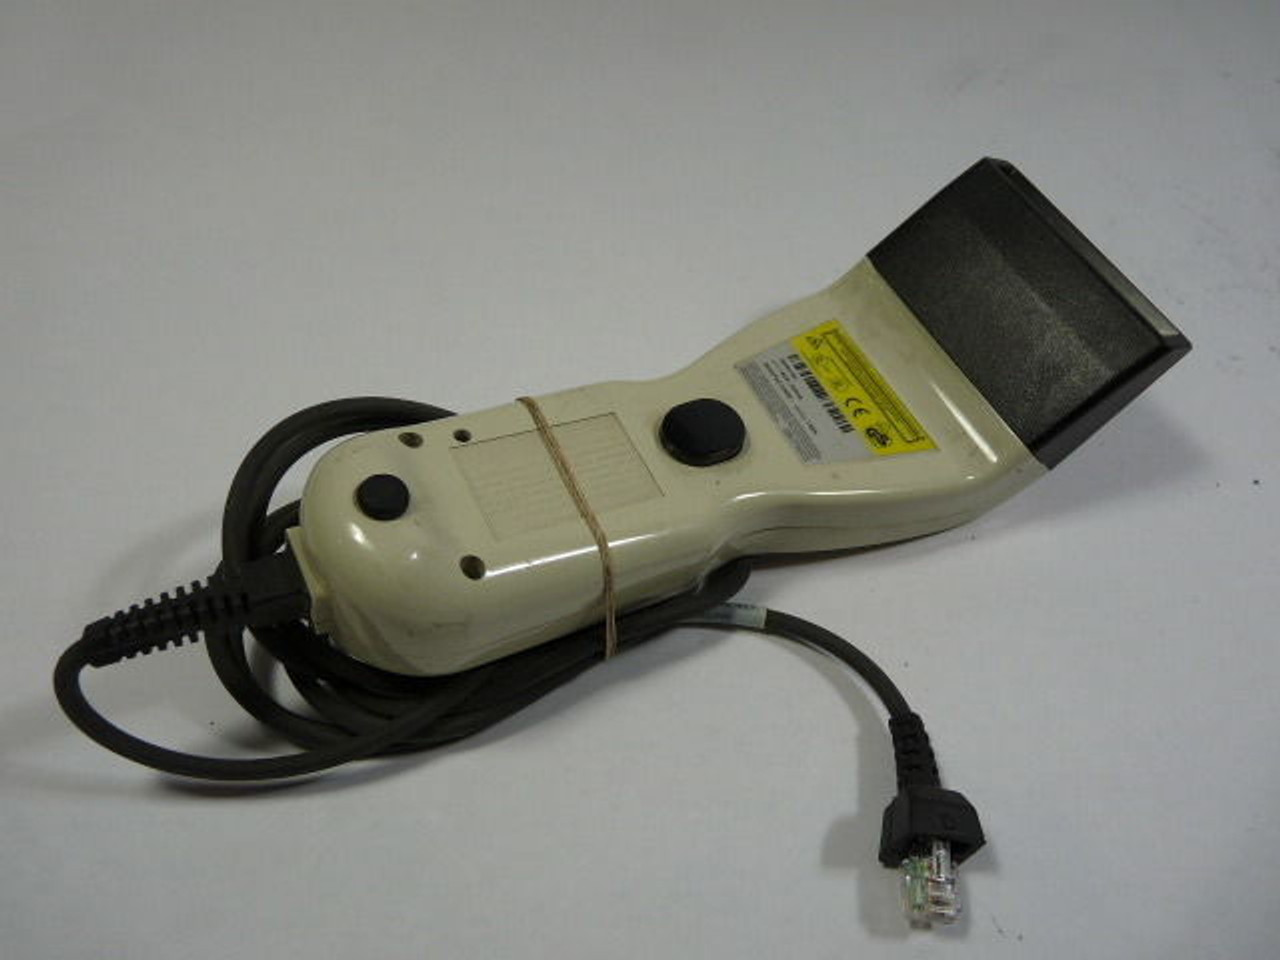 Symbol LT-1806-I500A Laser Touch Barcode Scanner USED